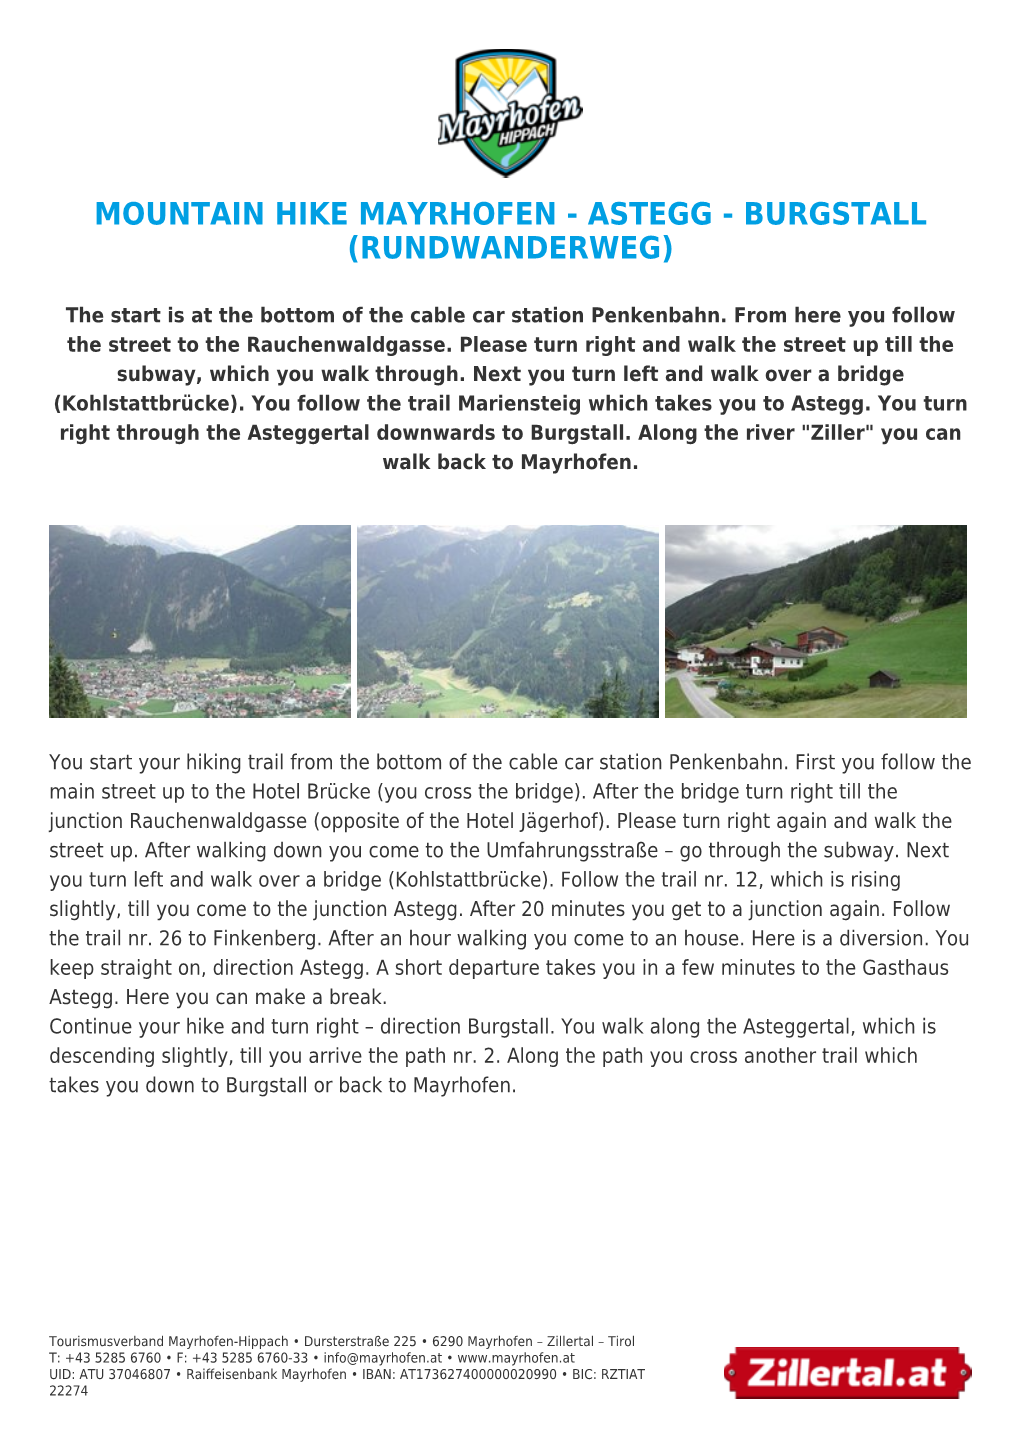 Mountain Hike Mayrhofen - Astegg - Burgstall (Rundwanderweg)